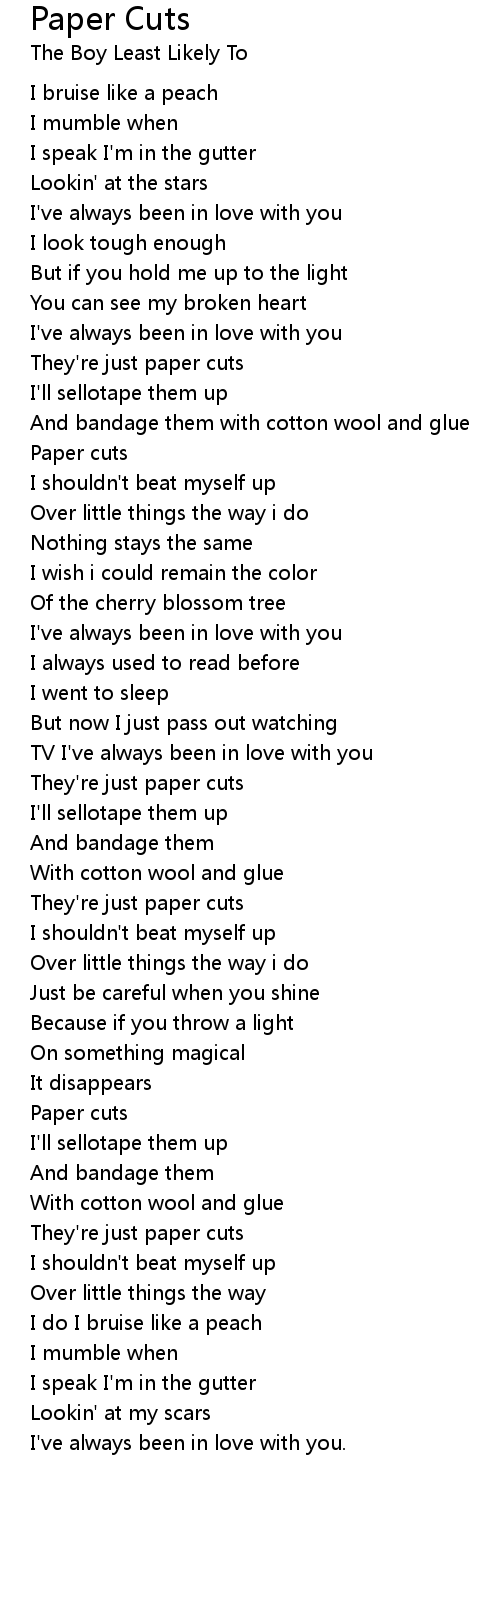 Paper cuts lyrics